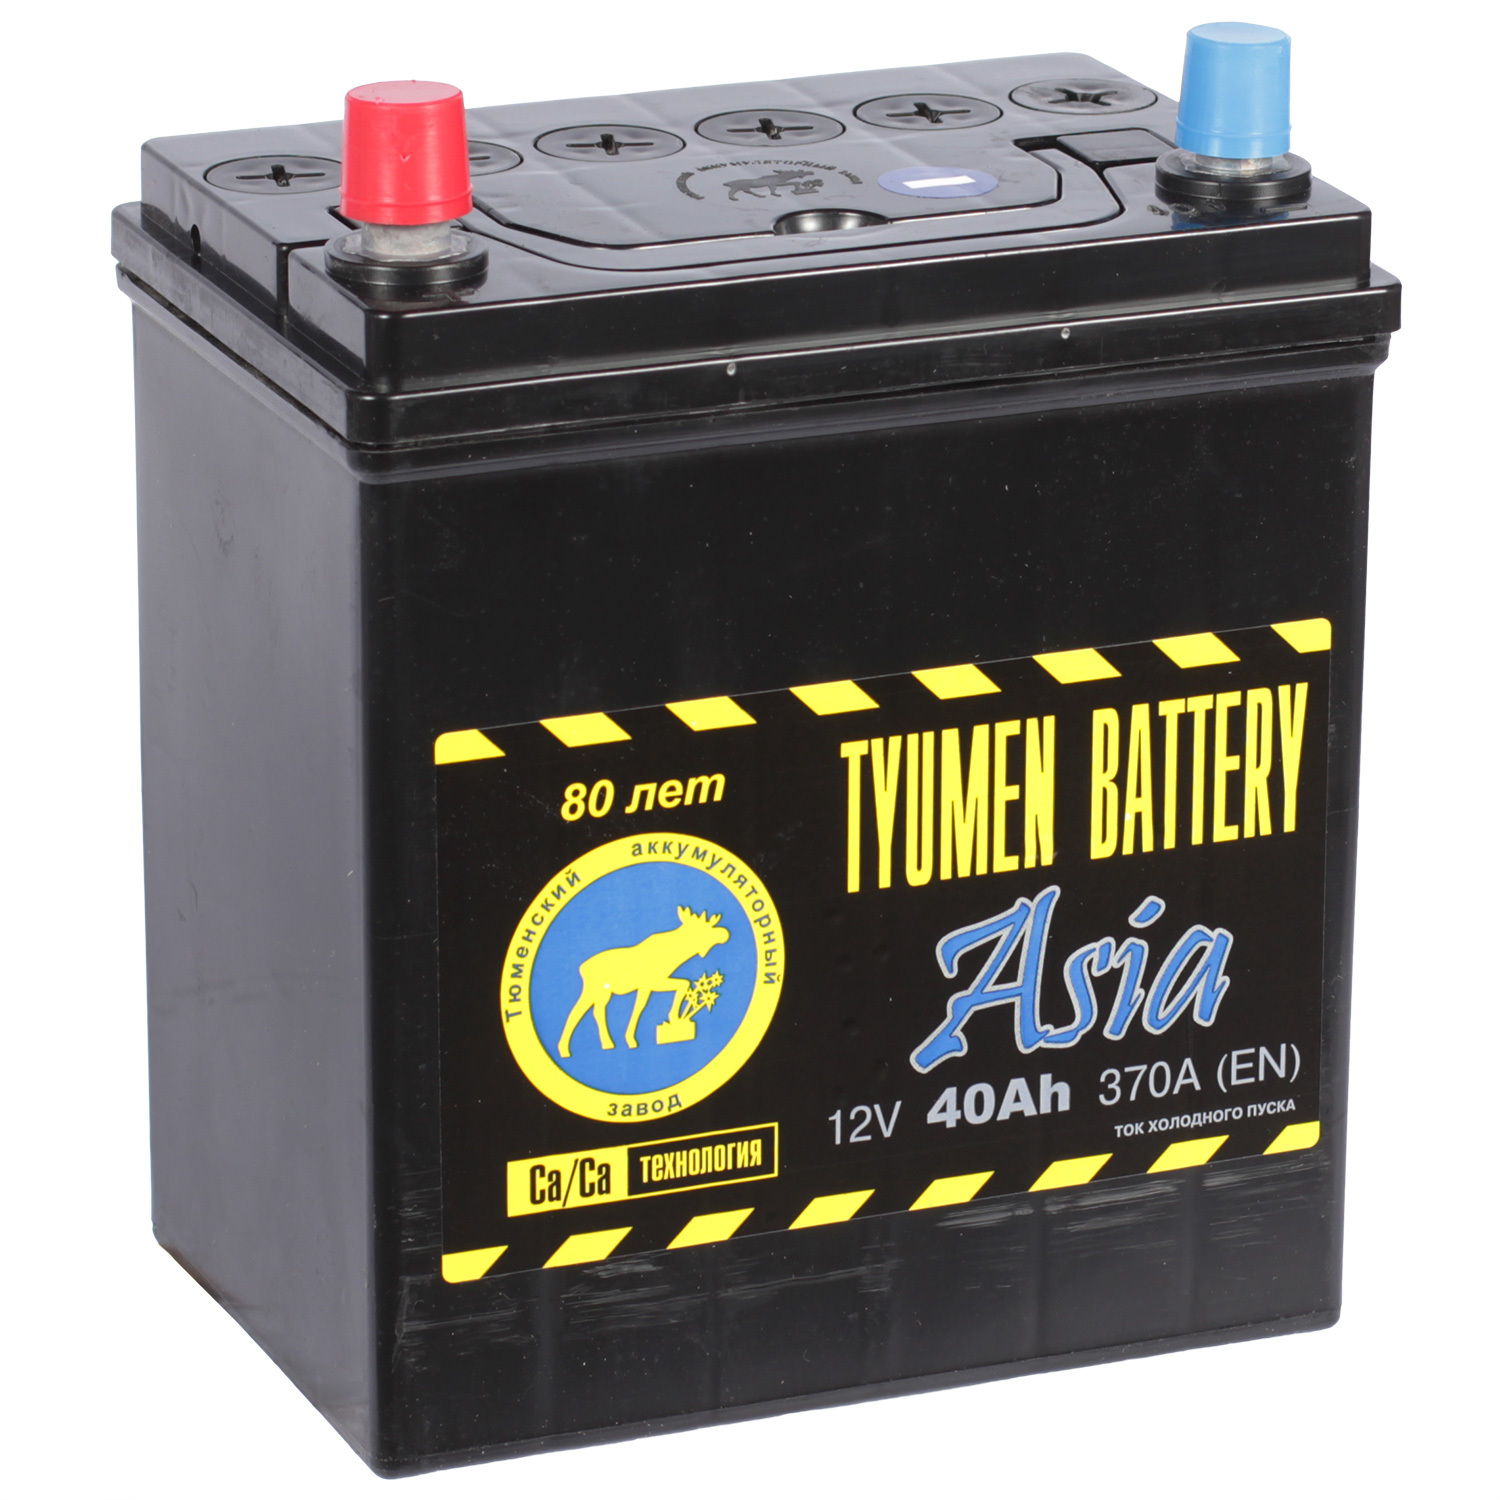 Tyumen Battery Автомобильный аккумулятор Tyumen Battery Asia 40 Ач прямая полярность B19R tyumen battery автомобильный аккумулятор tyumen battery 95 ач прямая полярность d31r